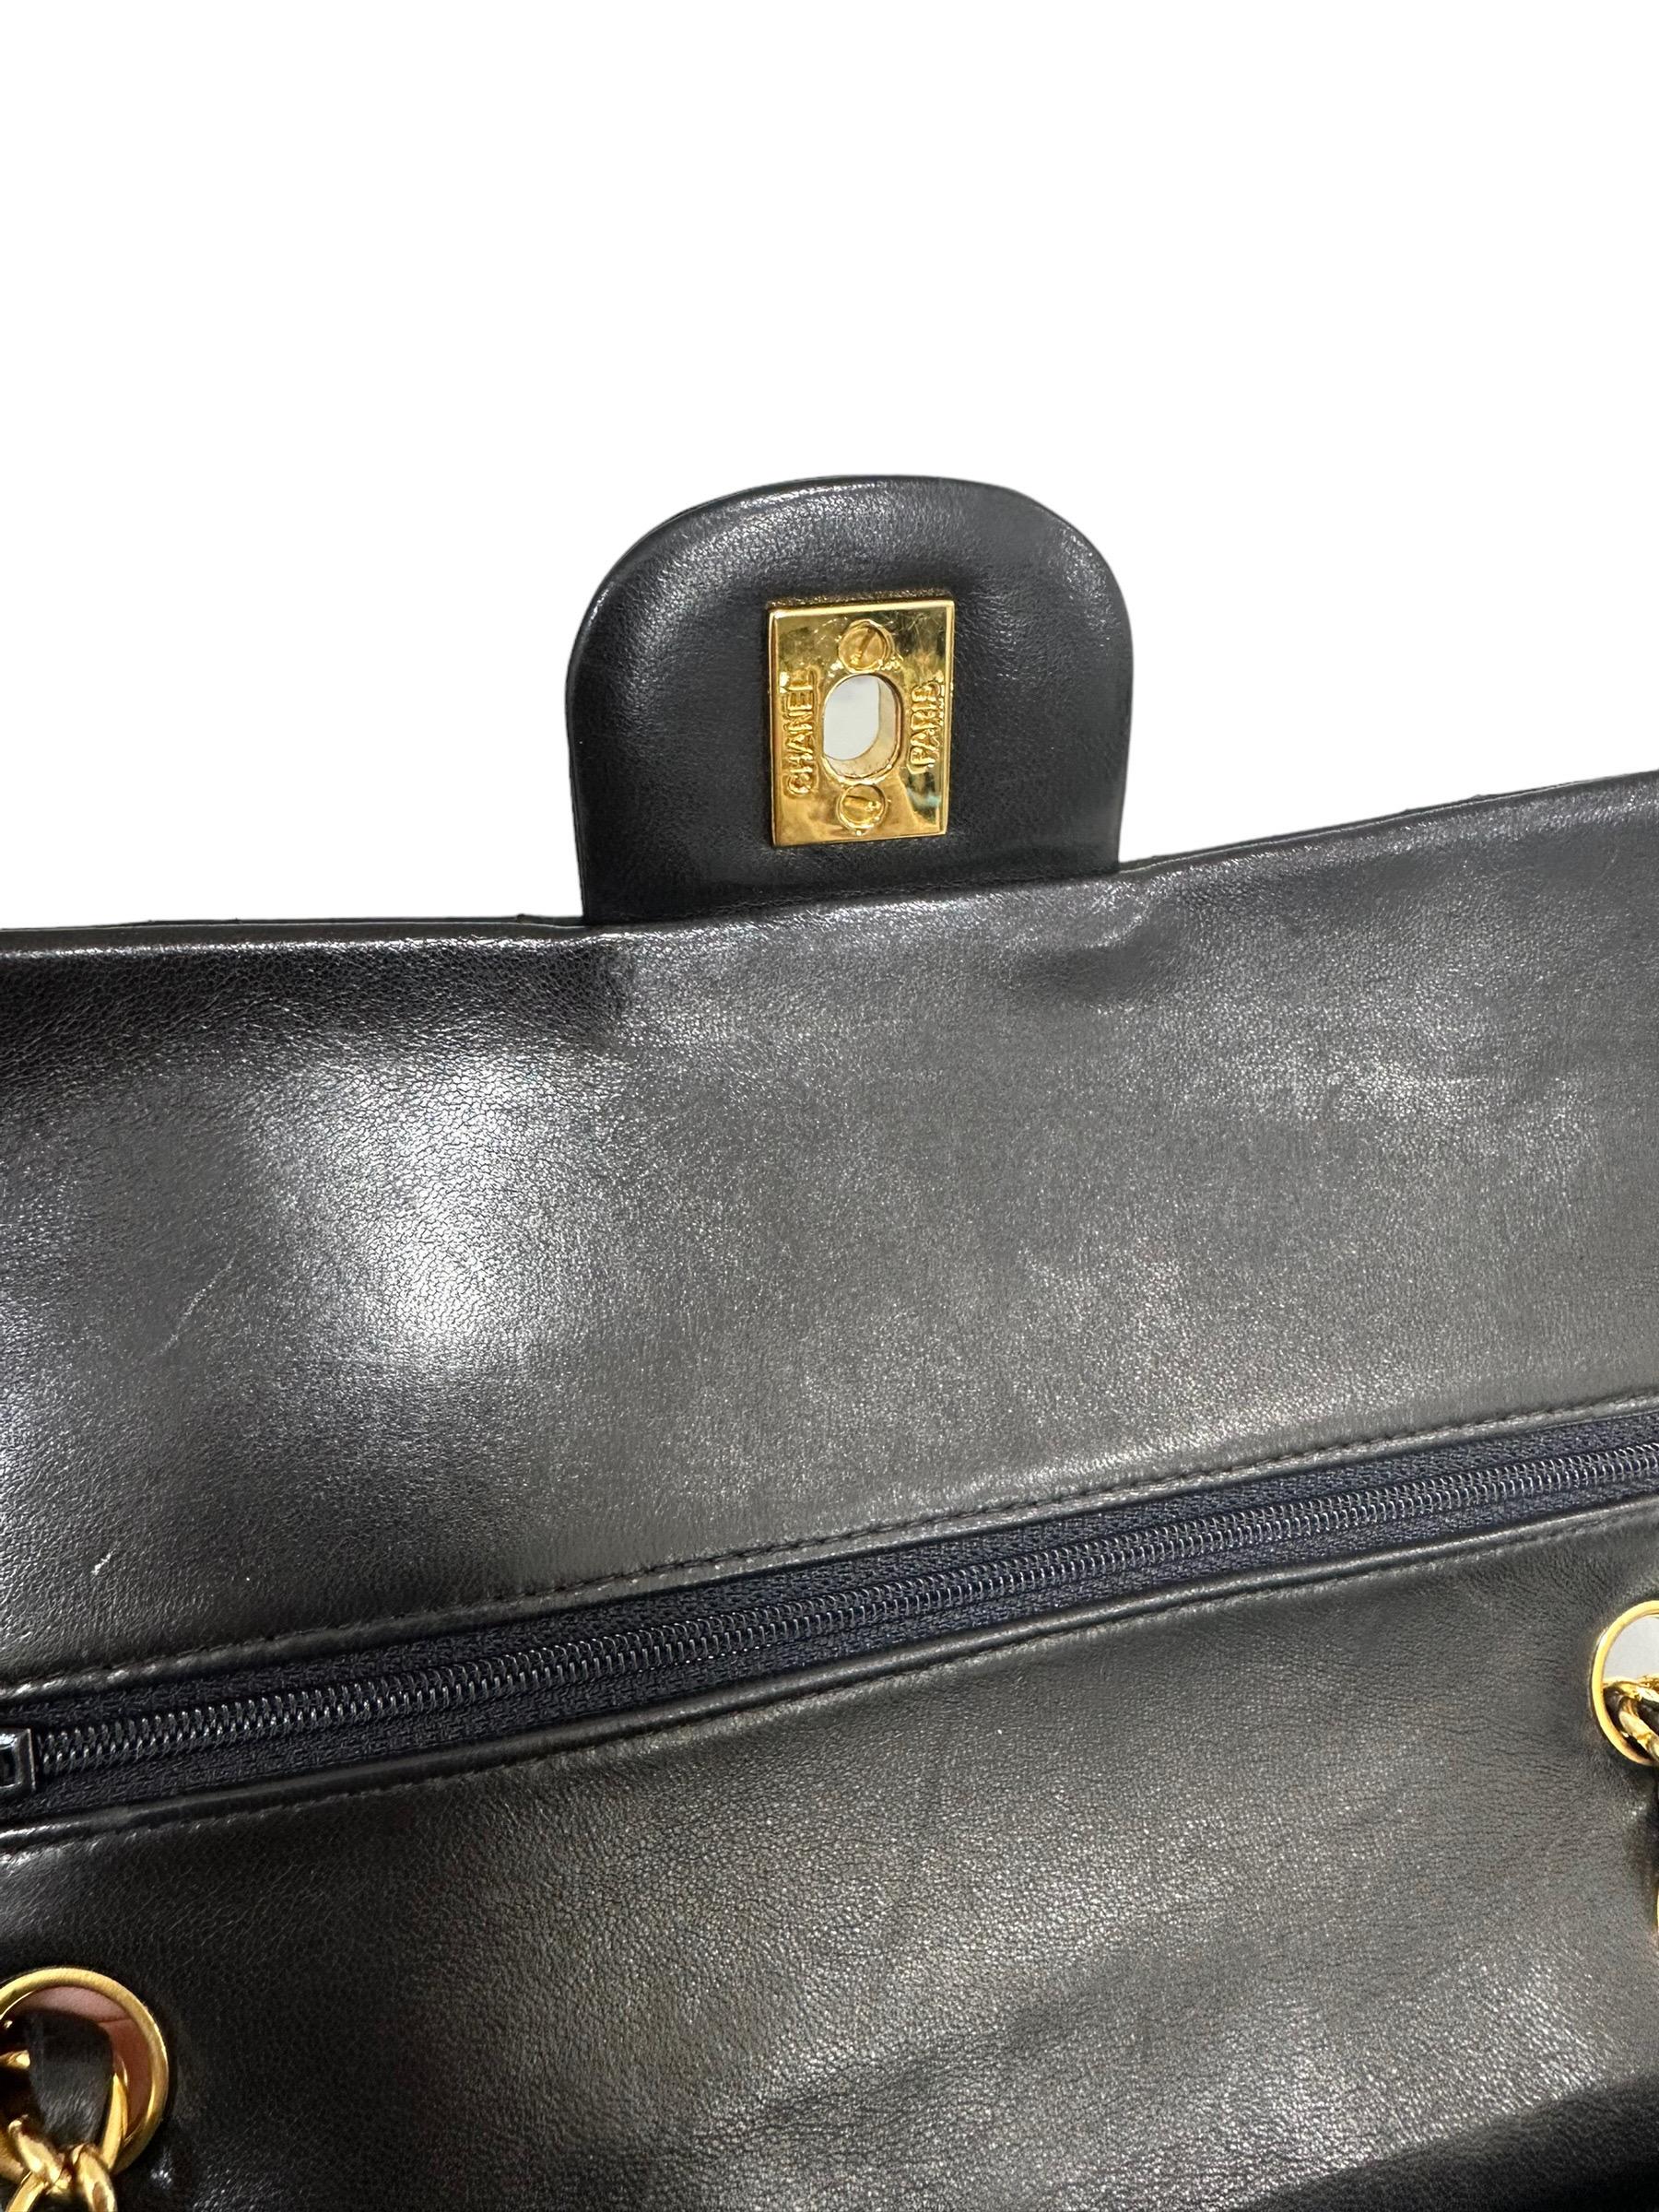 1996 Chanel Timeless Classic 2.55 Black Leather Top Shoulder Bag For Sale 9